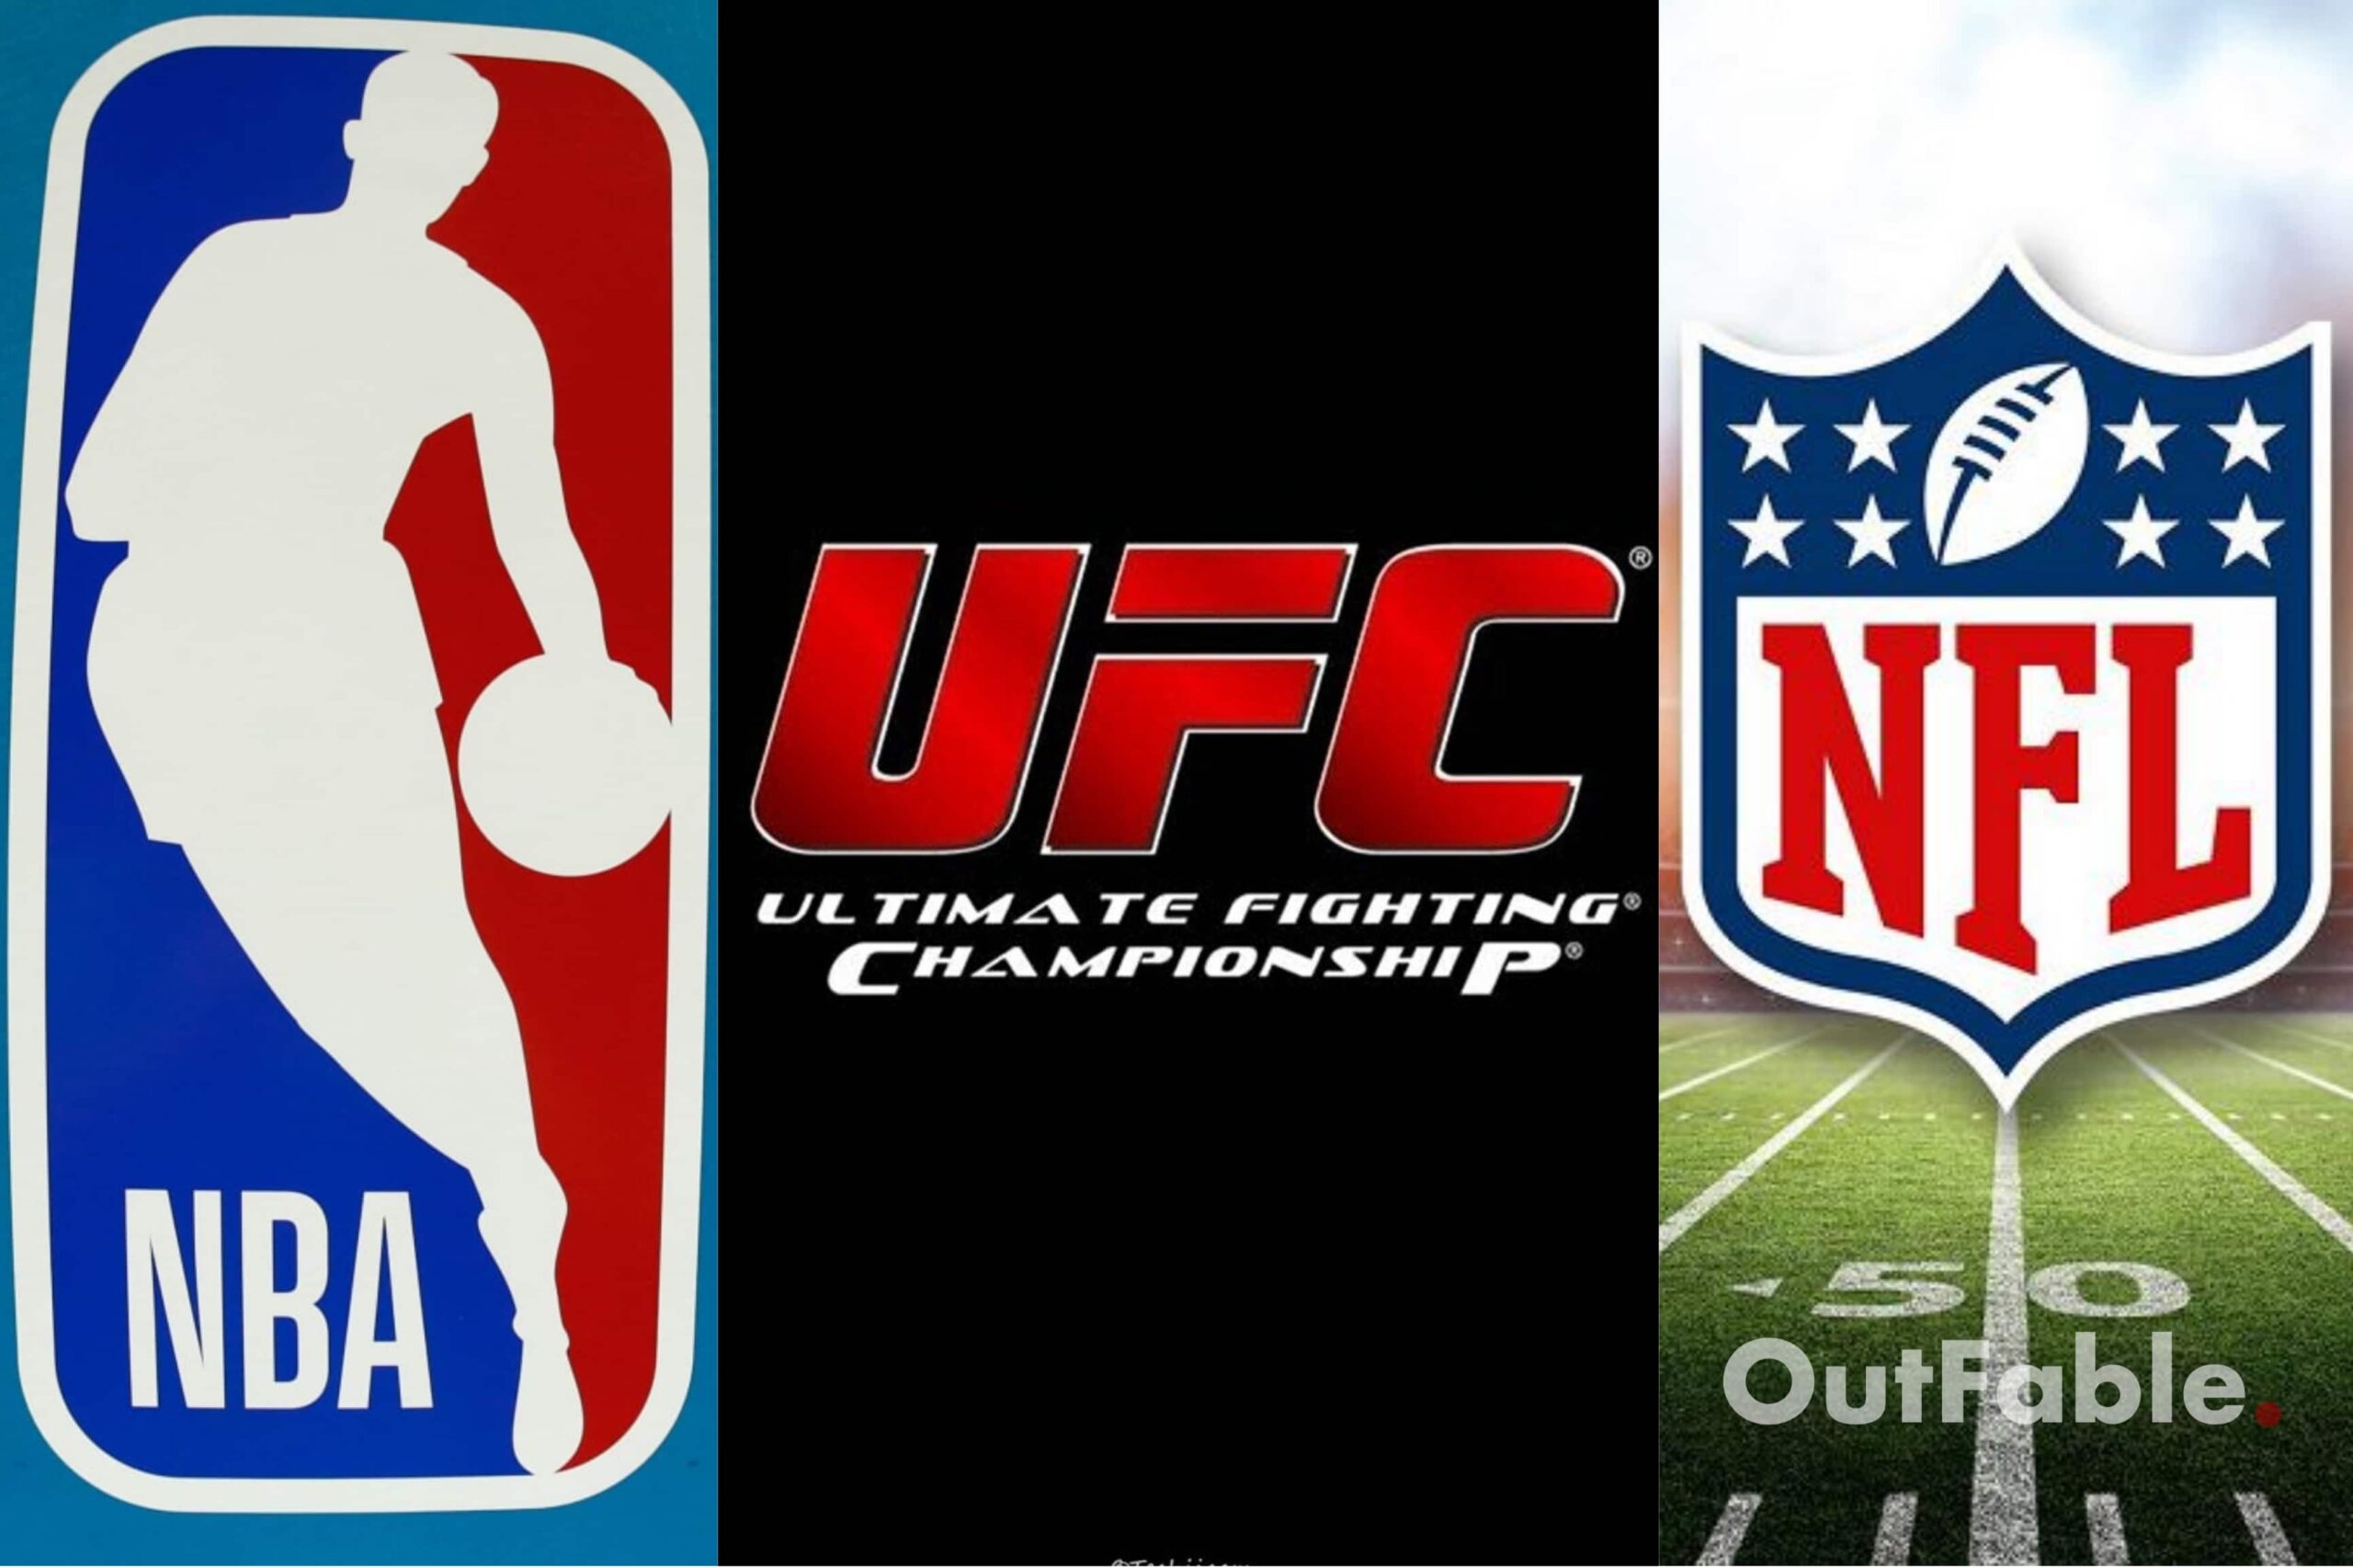 NBA logo, UFC logo, and NFL logo collage